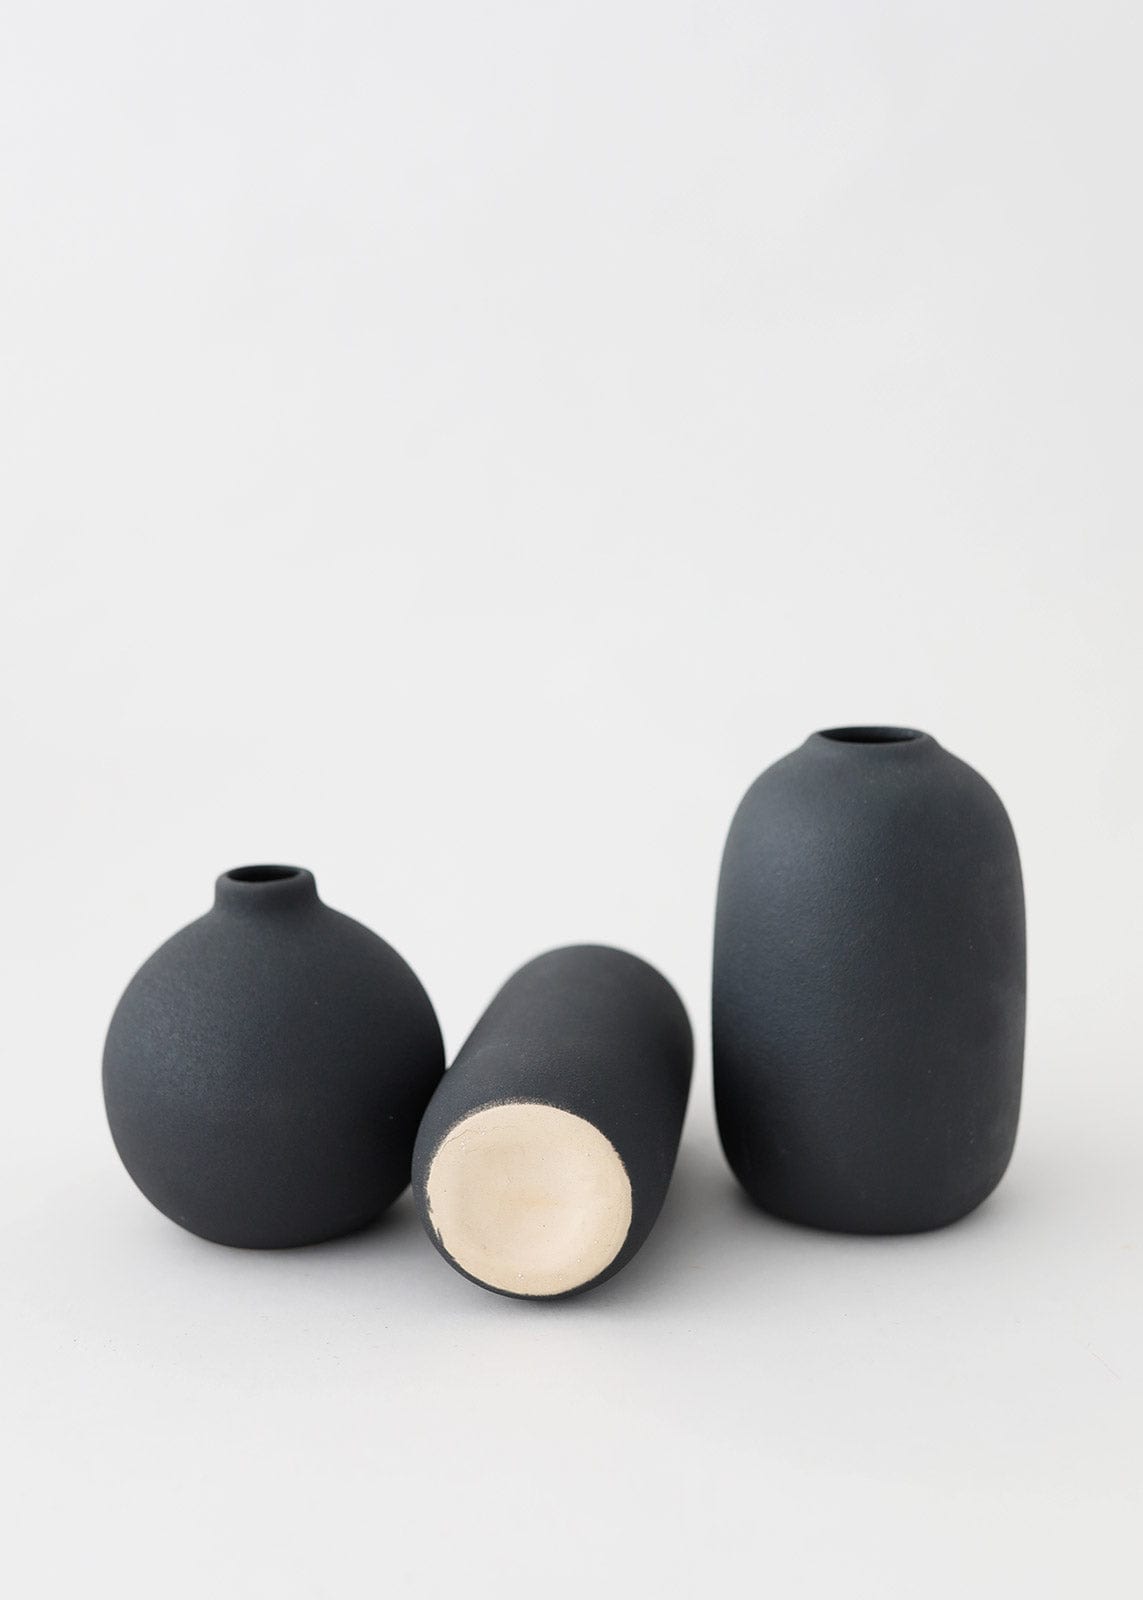 Bottom Shot of Black Ceramic Bud Vases